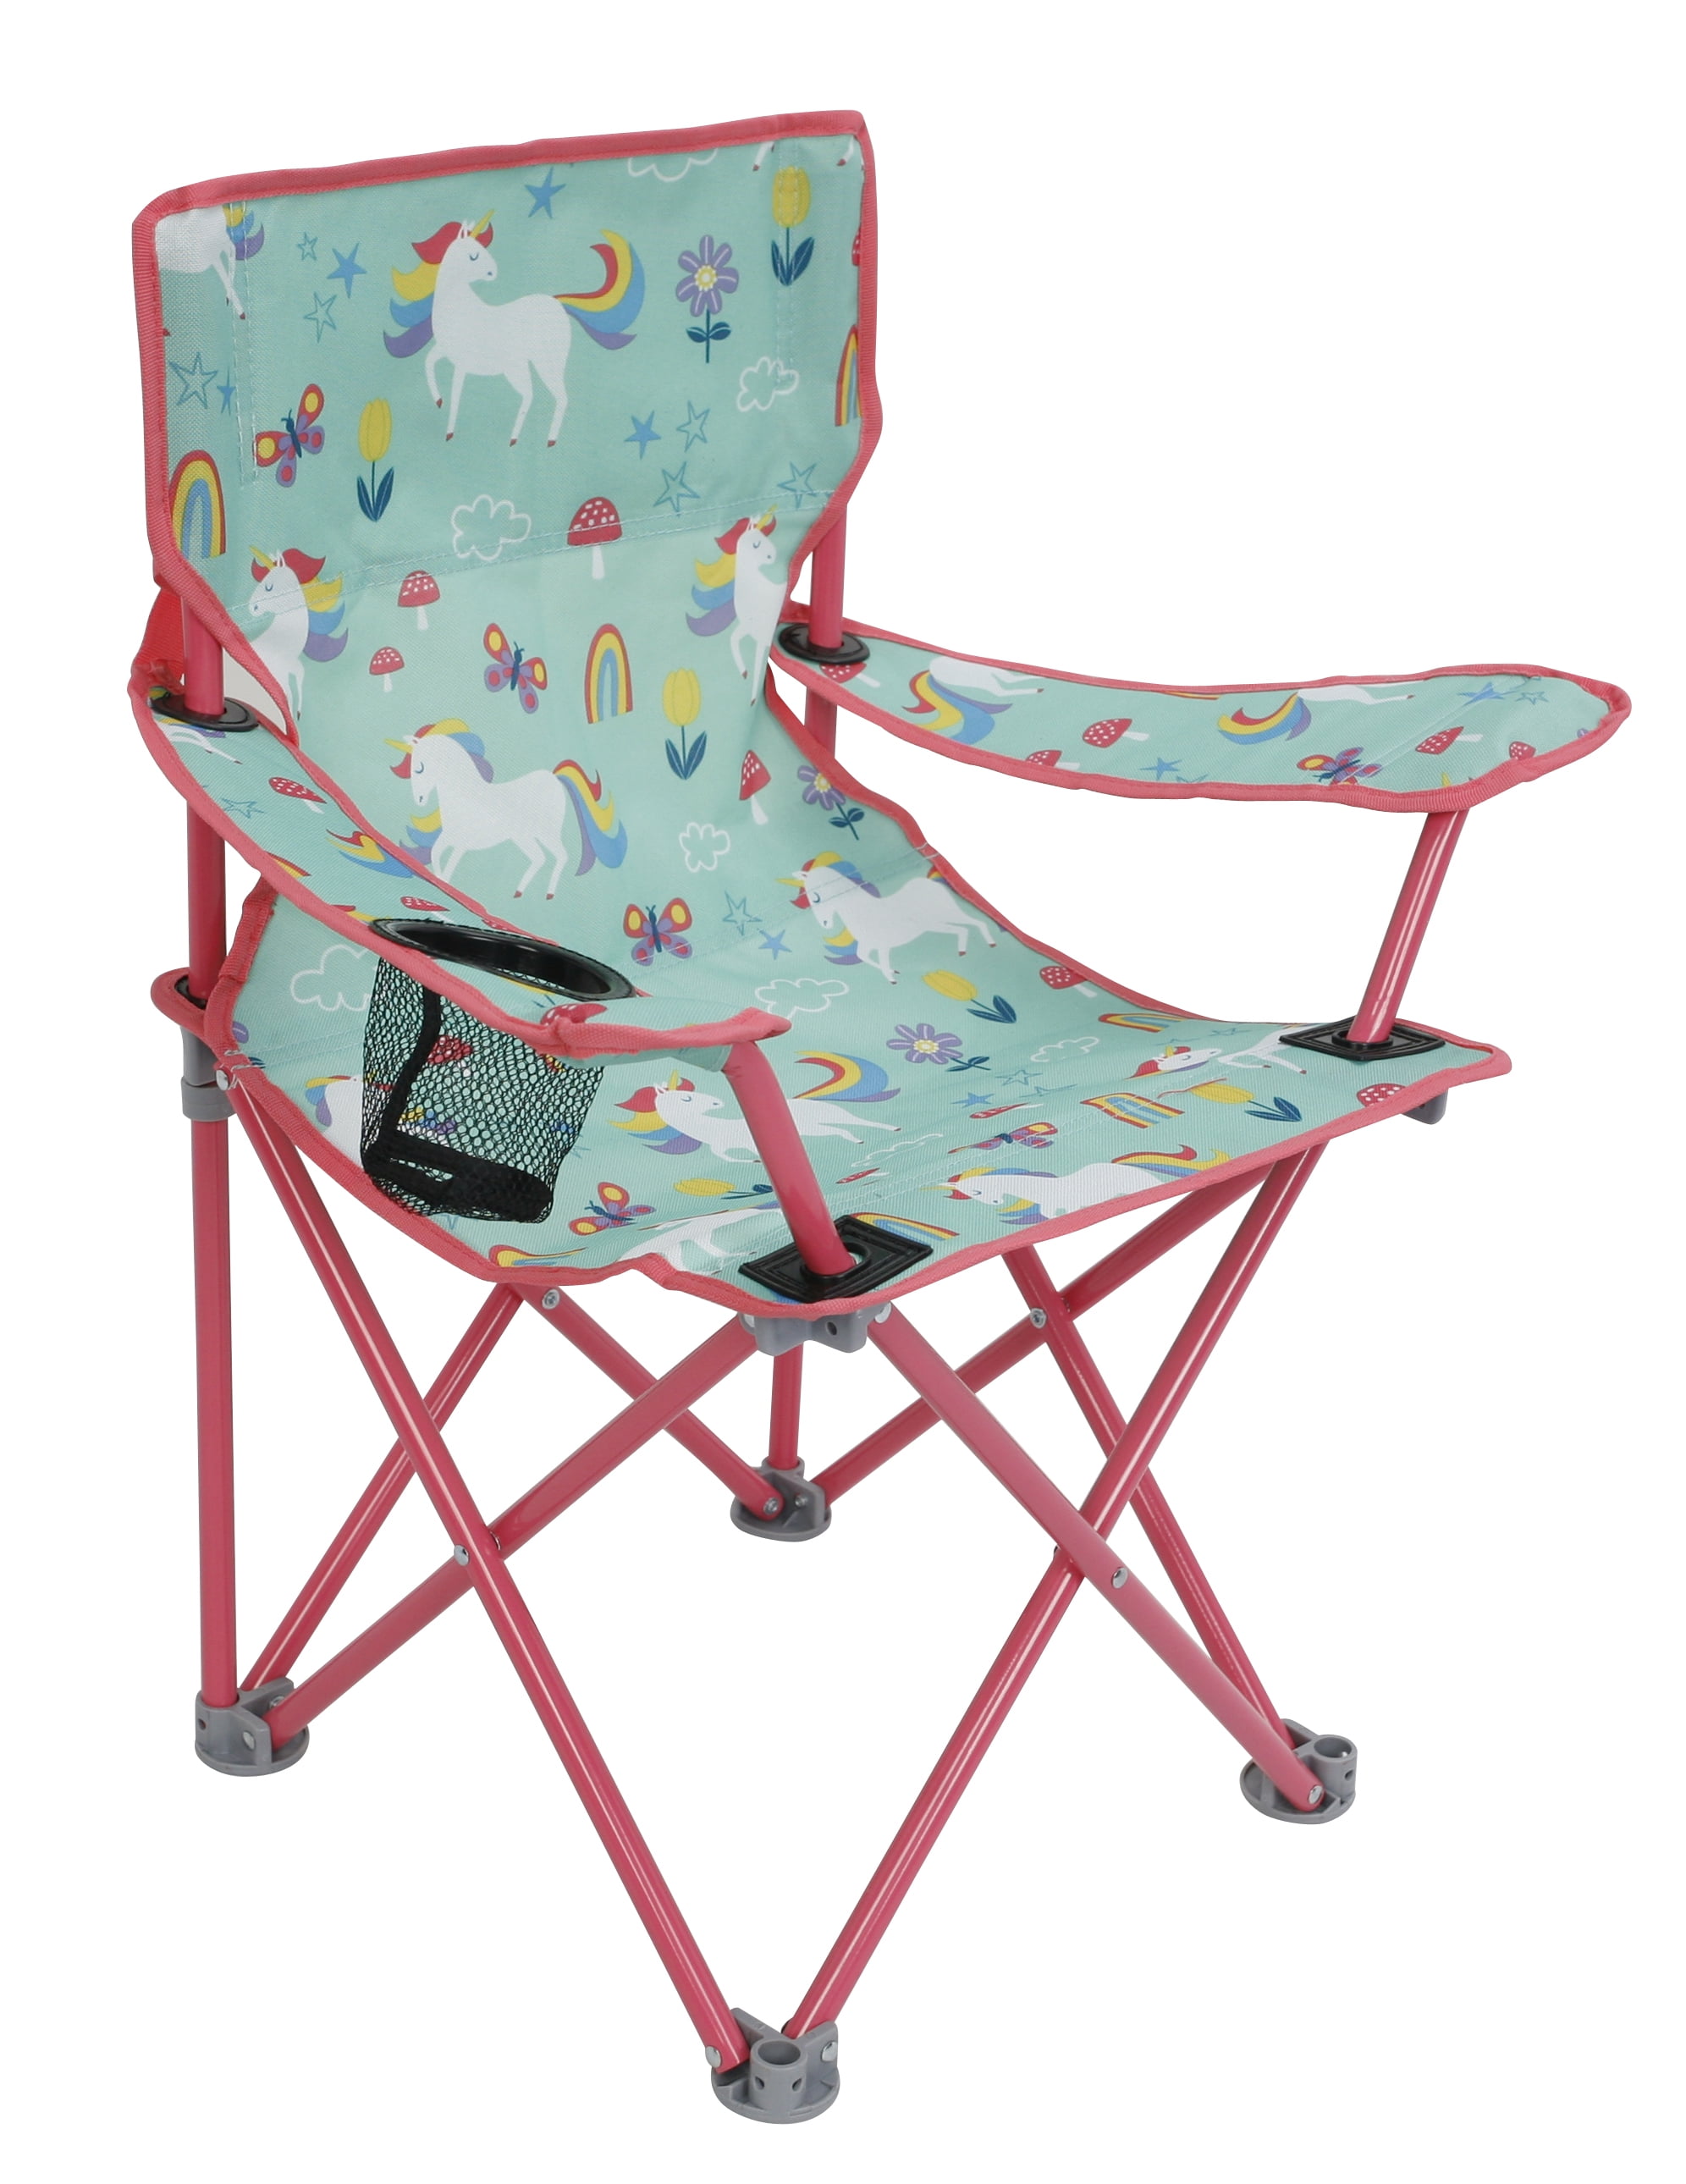 Kmart Kids Camp Chair Off 61